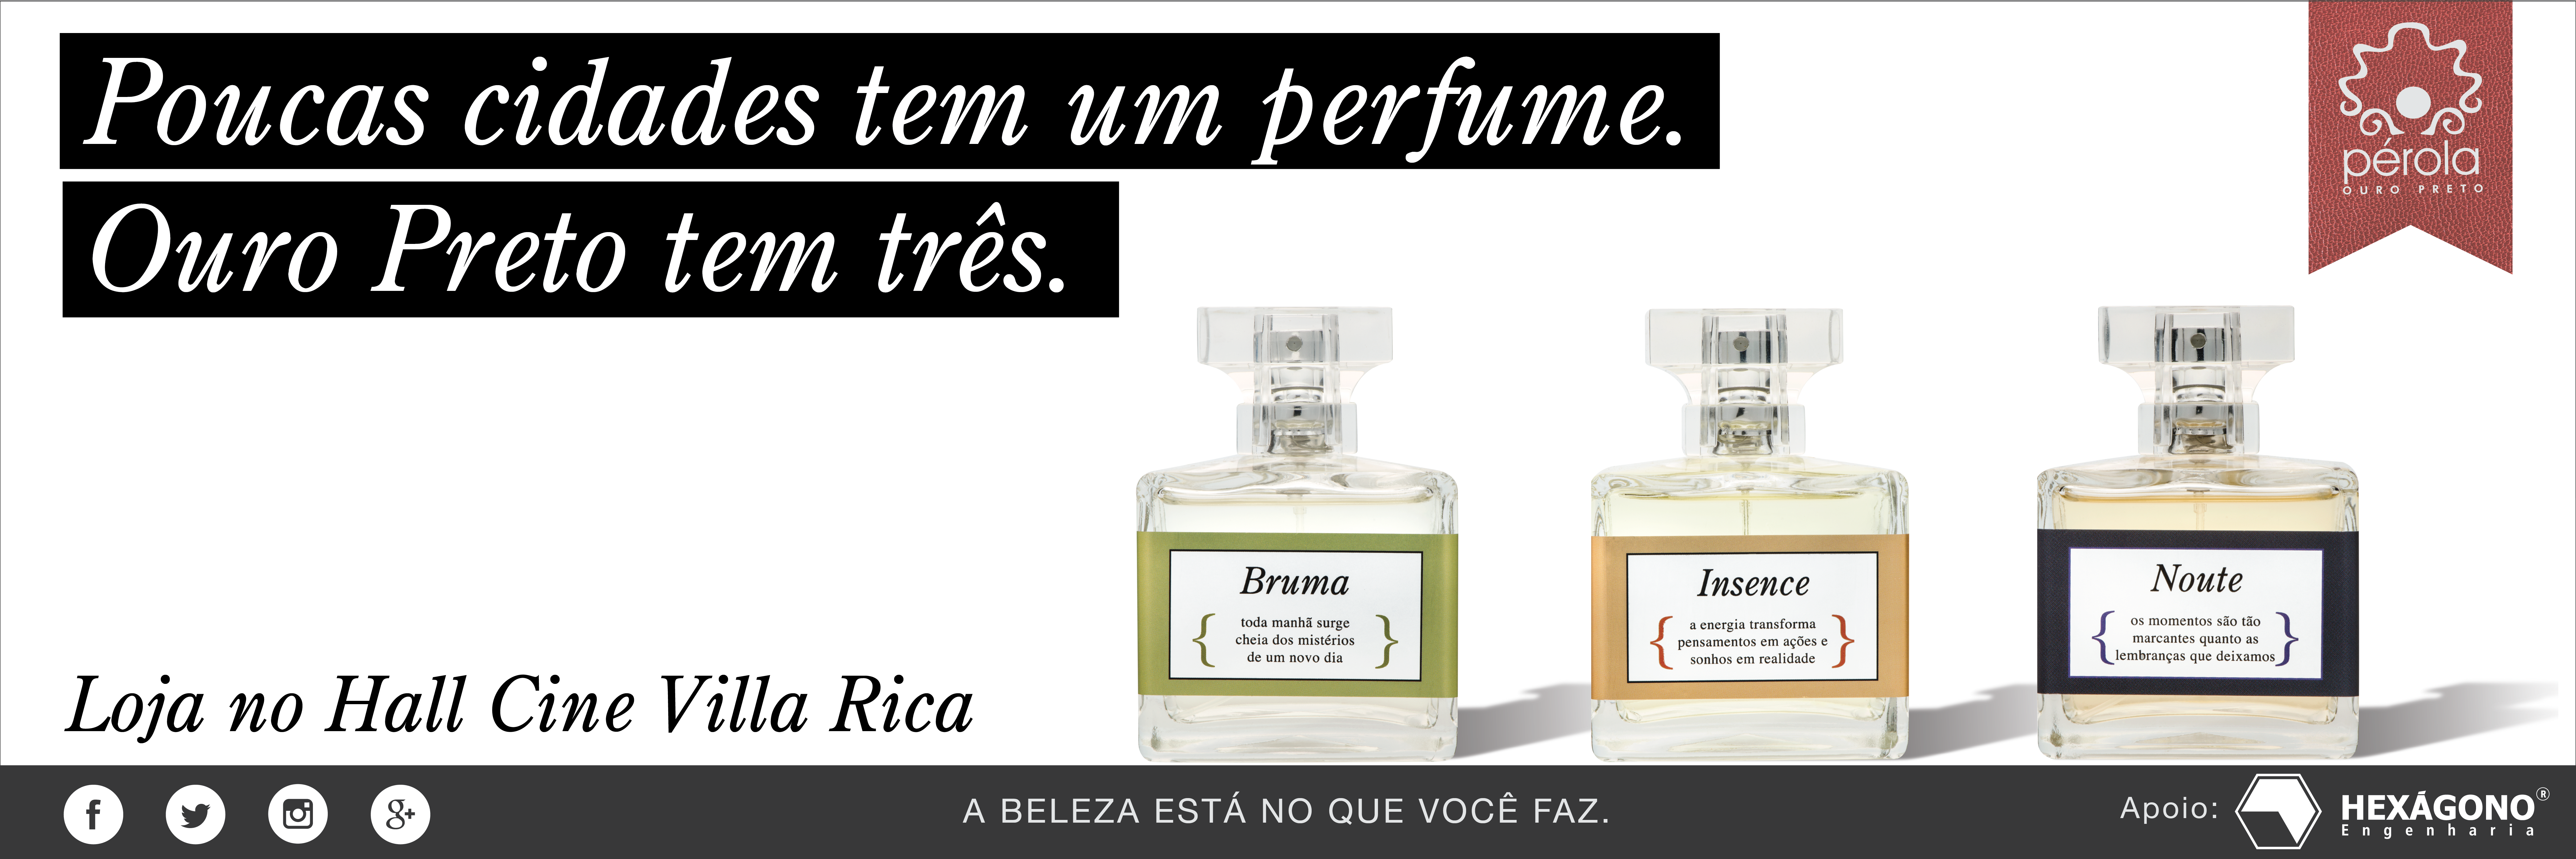 Perfumes Pérola Ouro Preto